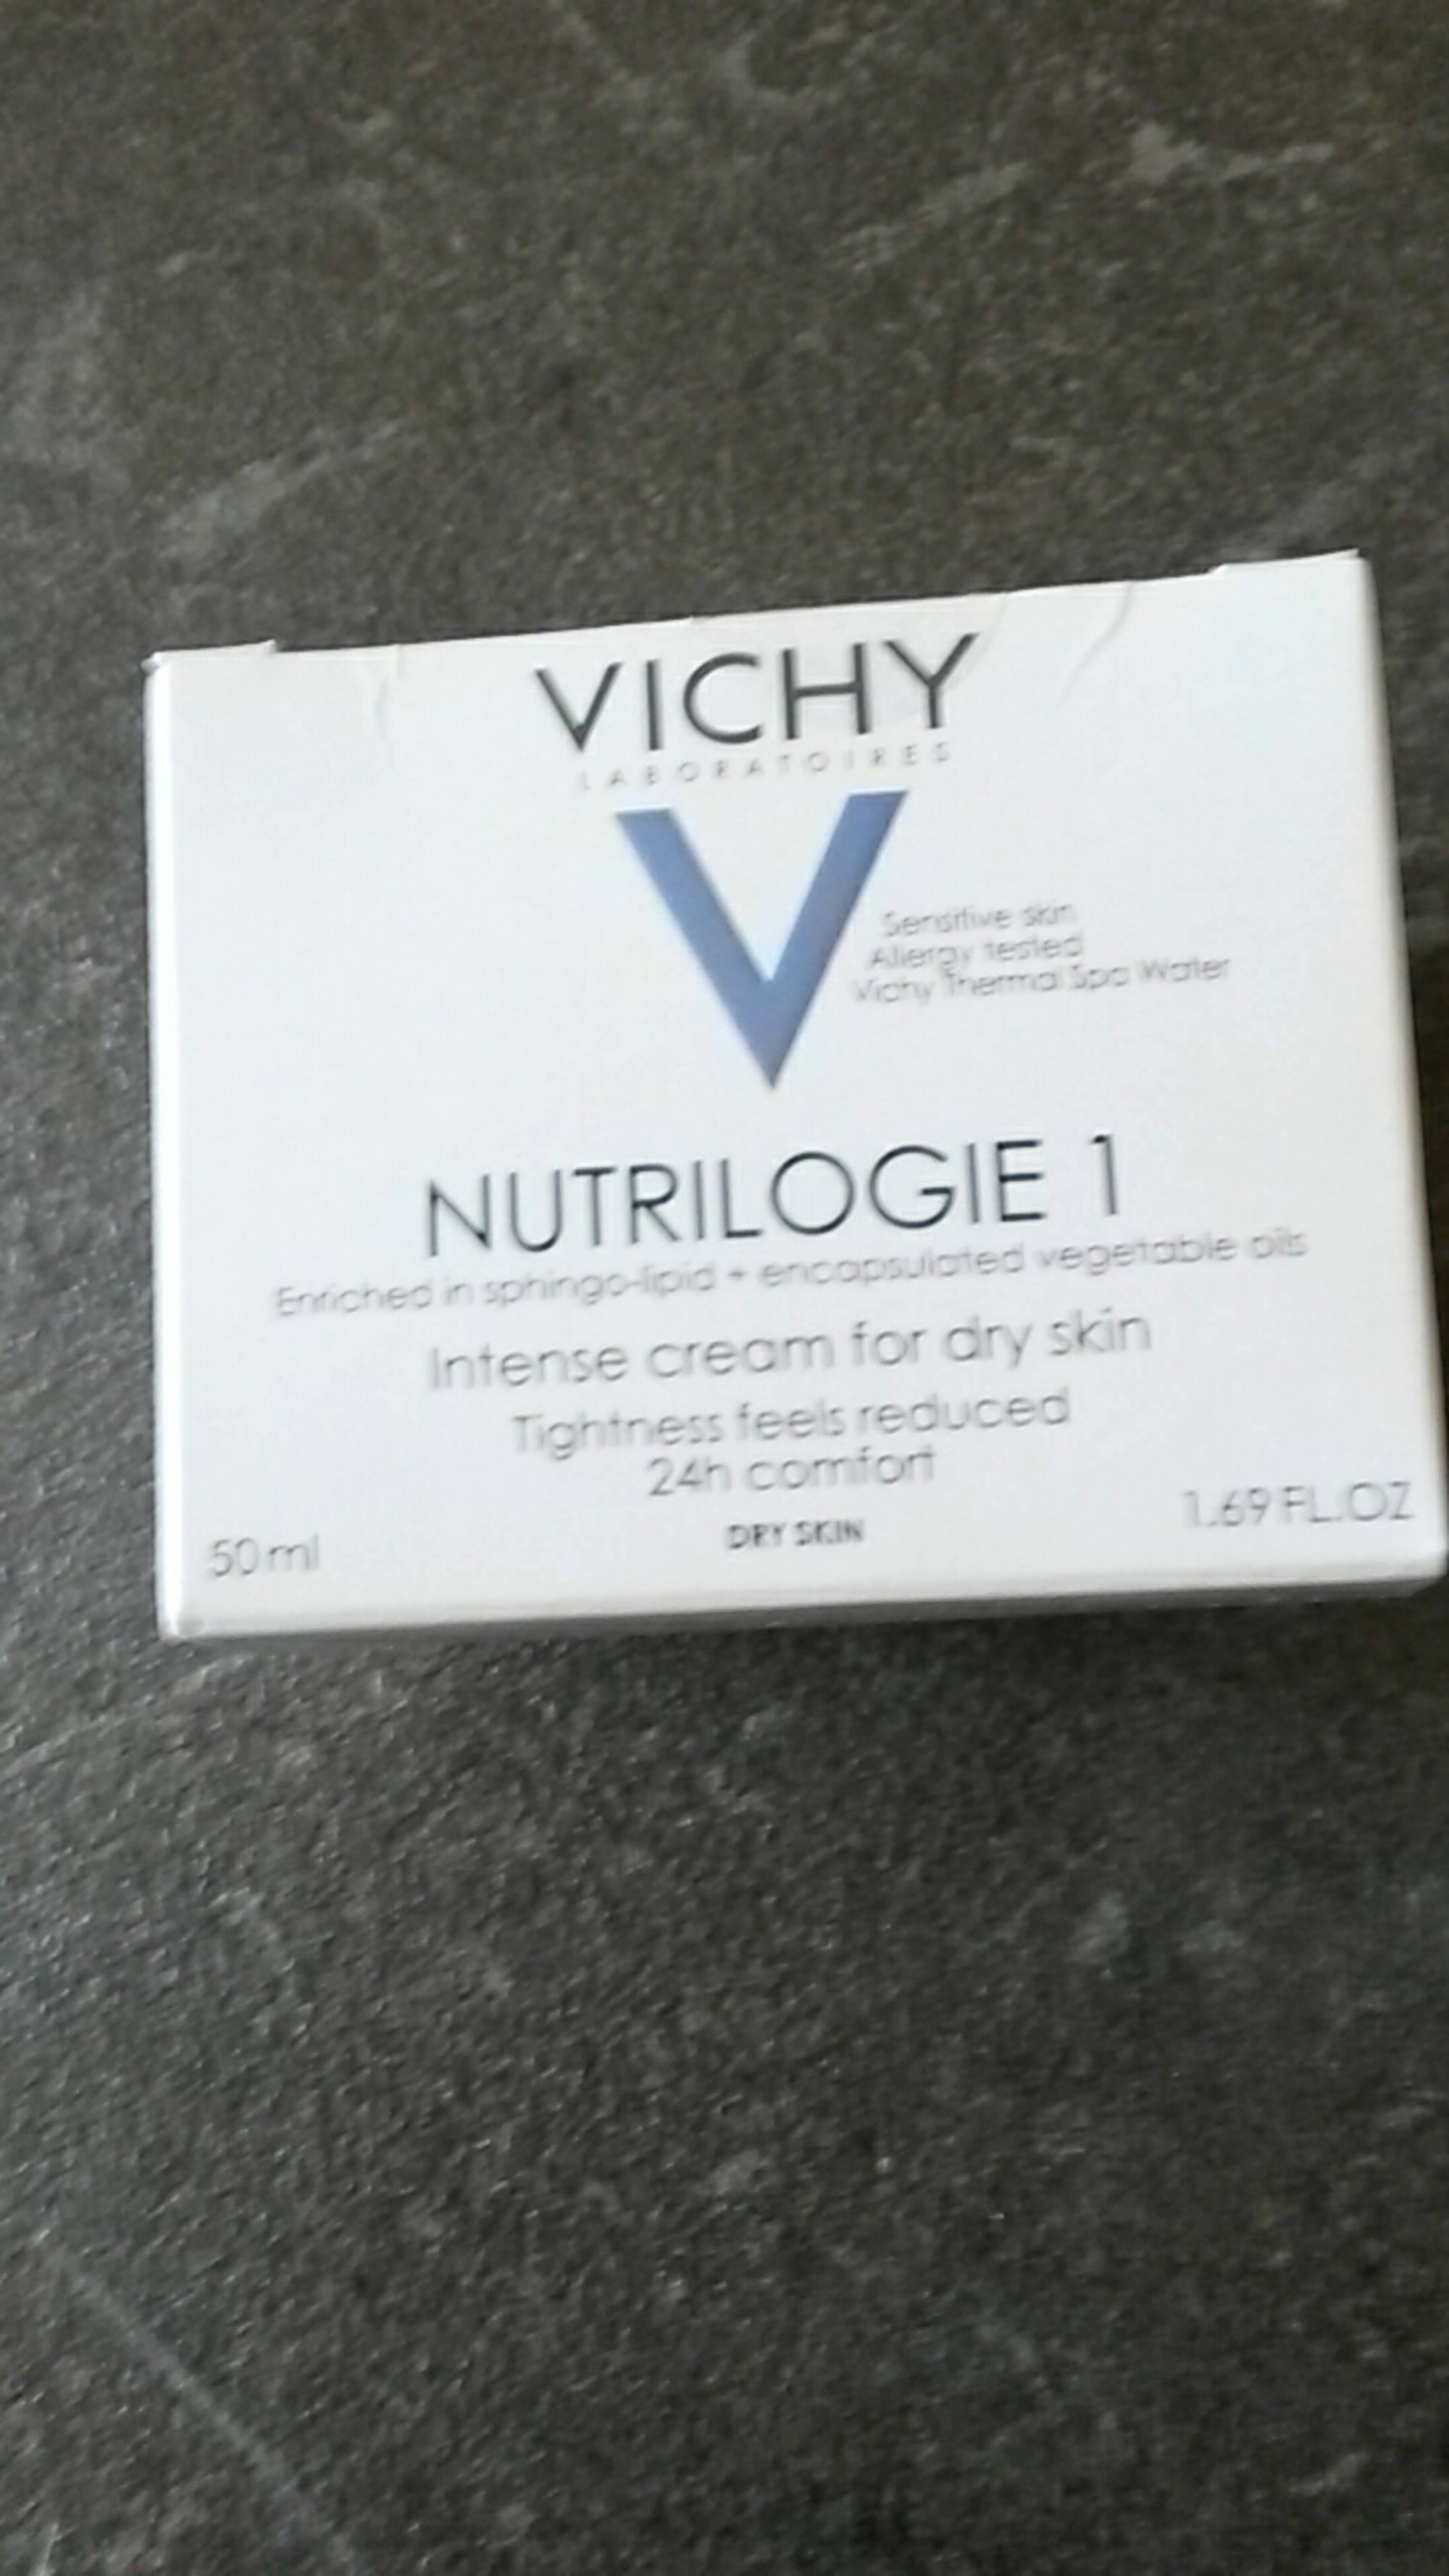 VICHY - Nutrilogie 1 - Intense cream for dry skin